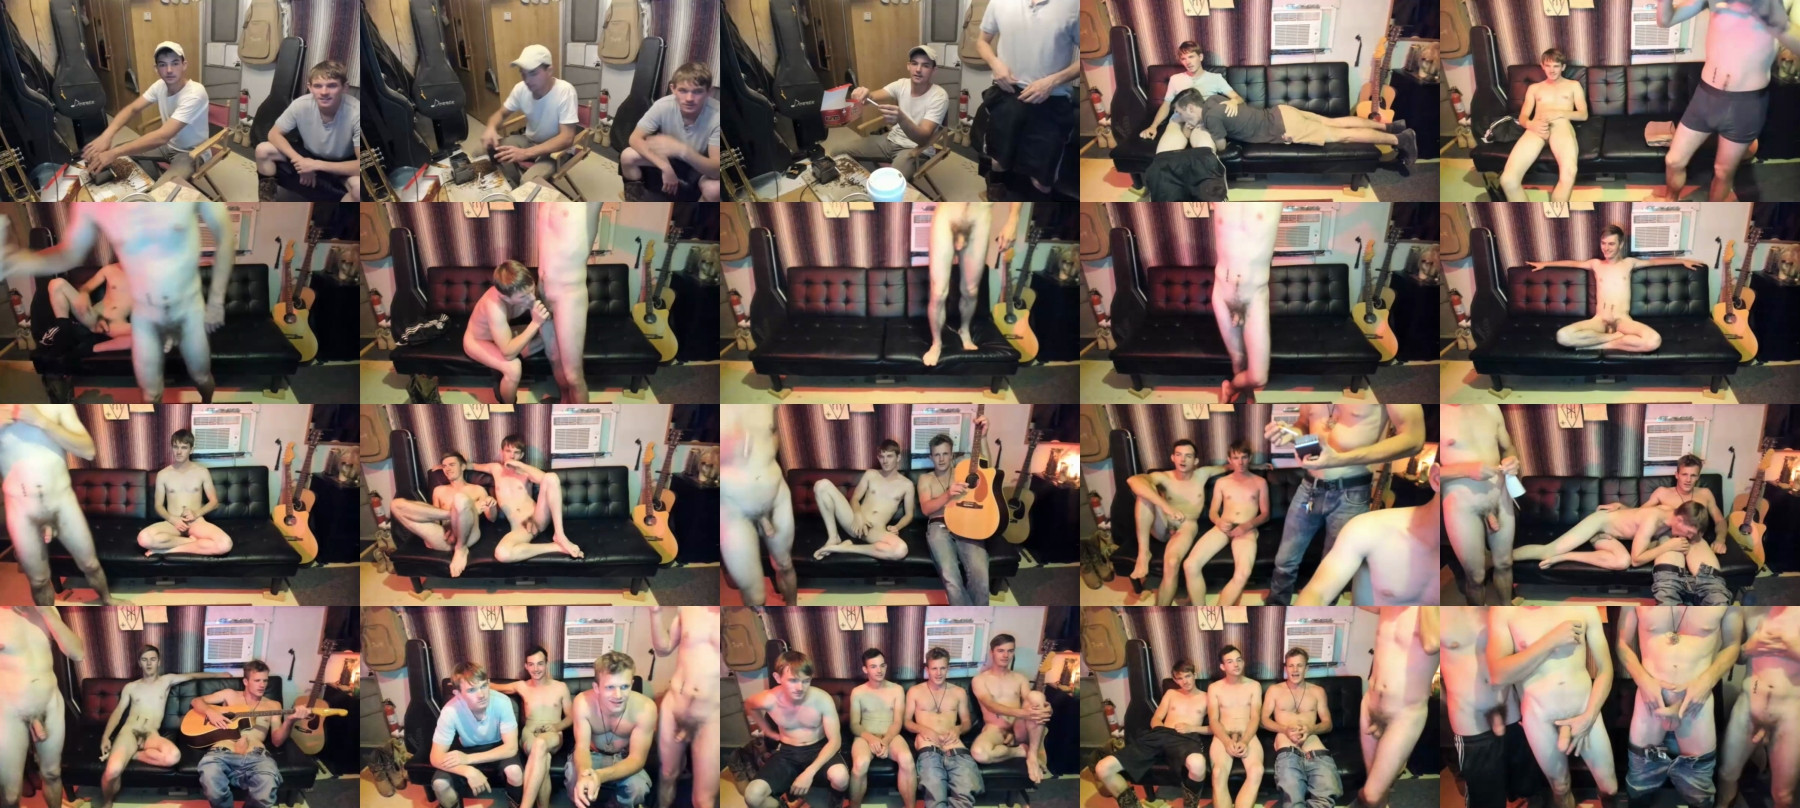 Hollandhousestudios  01-05-2021 Male Topless